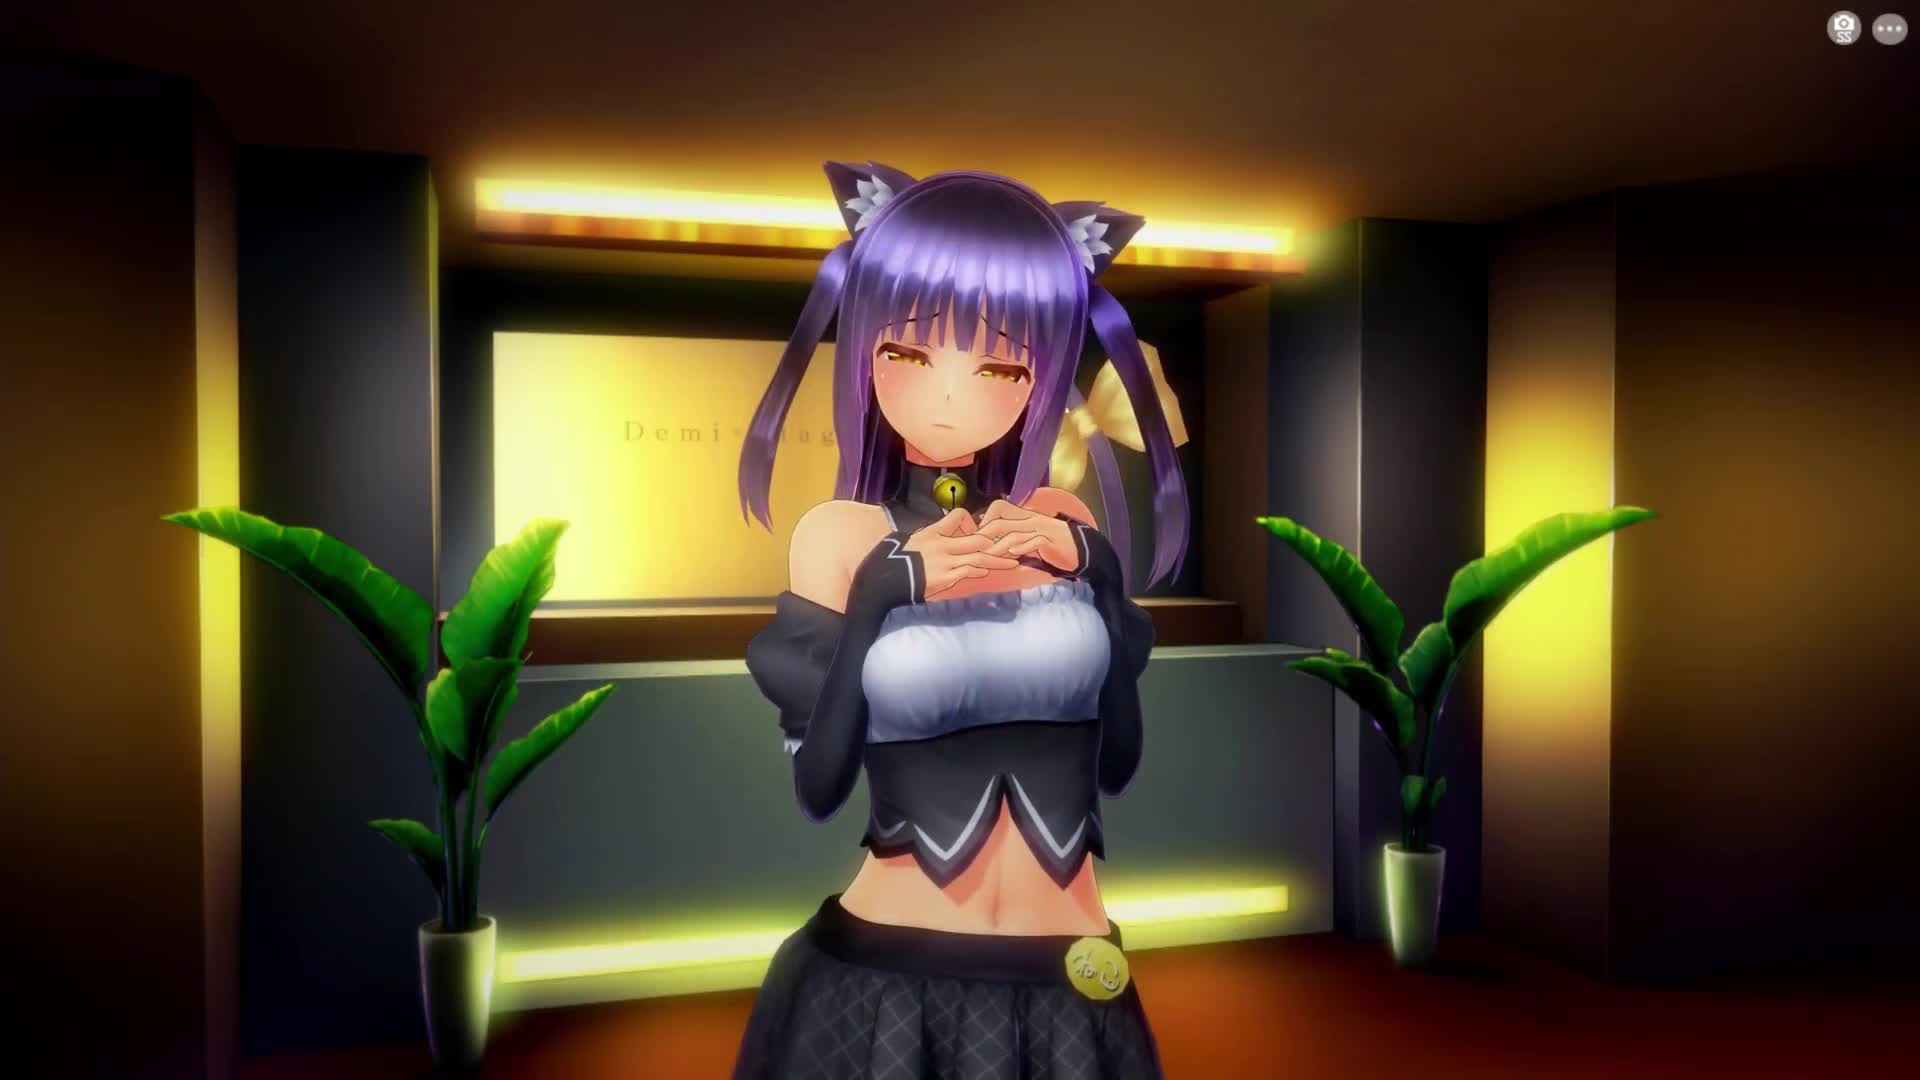 KittyMaid Hard Sex and Gang Bang 3D Hentai 4K 60FPS Uncensored63744007 new